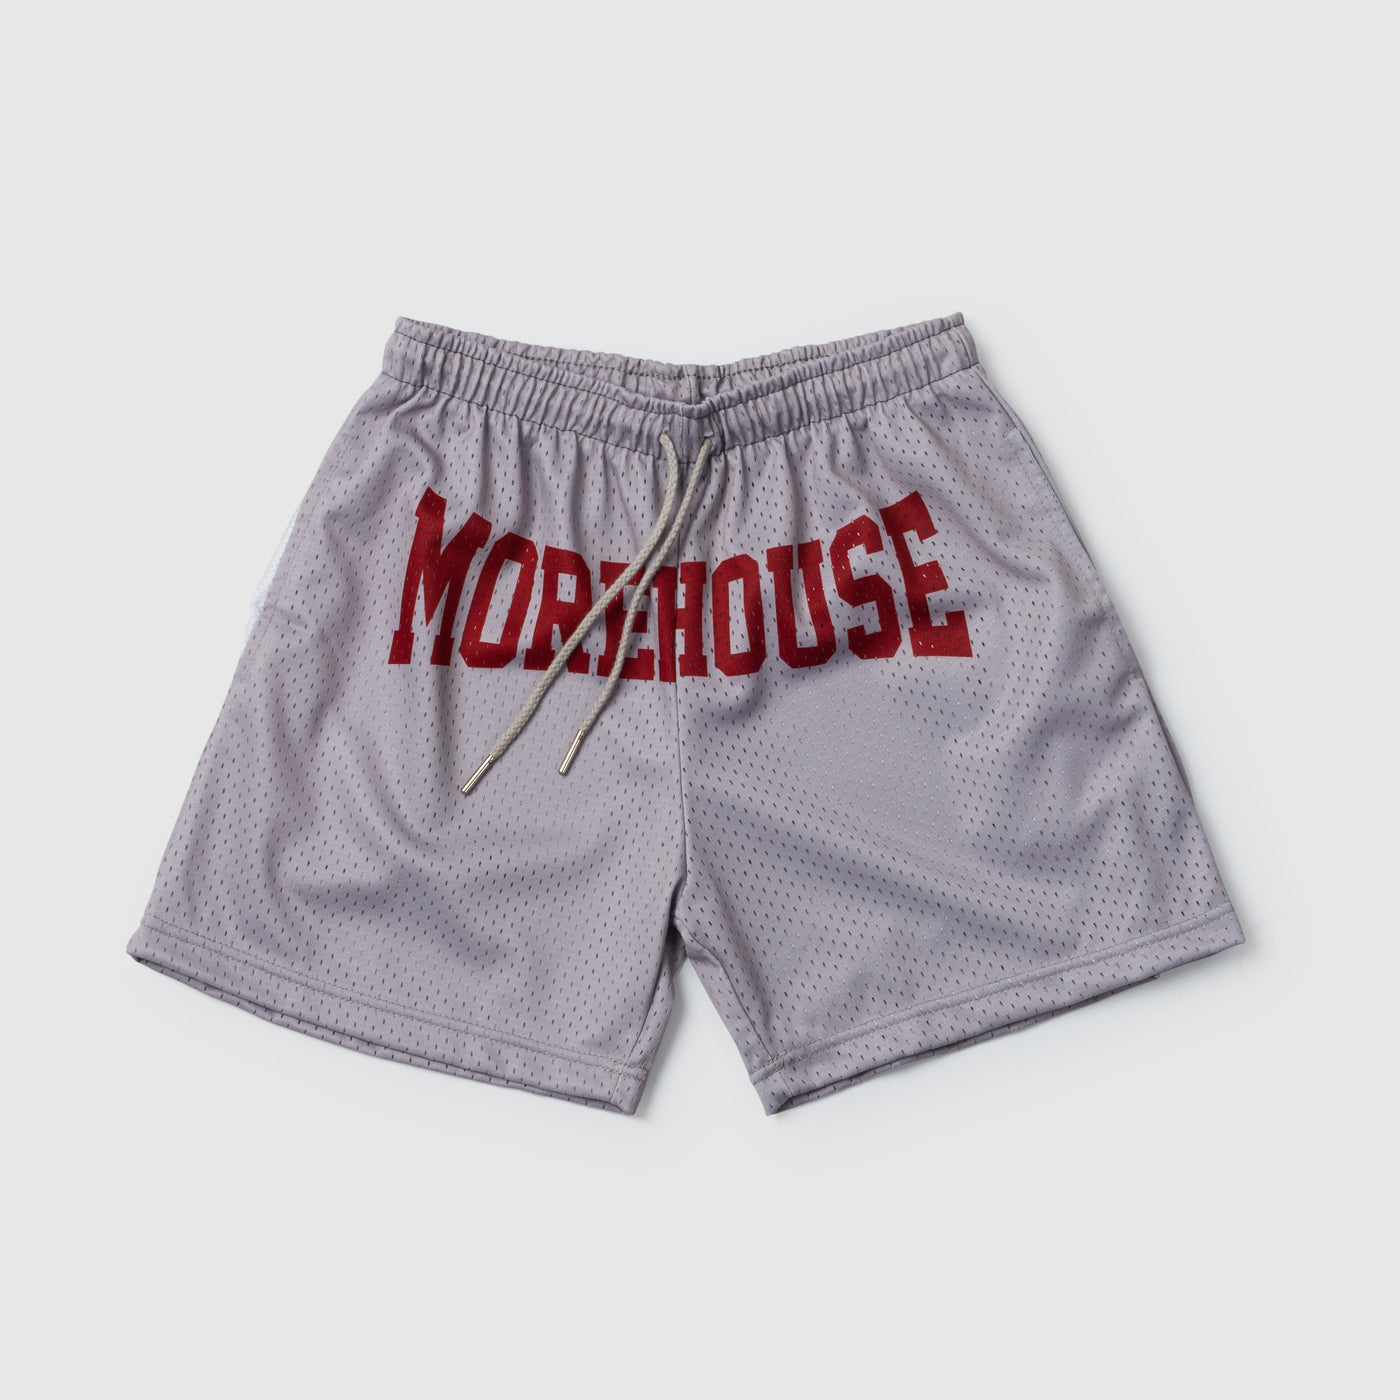 Morehouse Vintage Mesh Shorts (Grey)